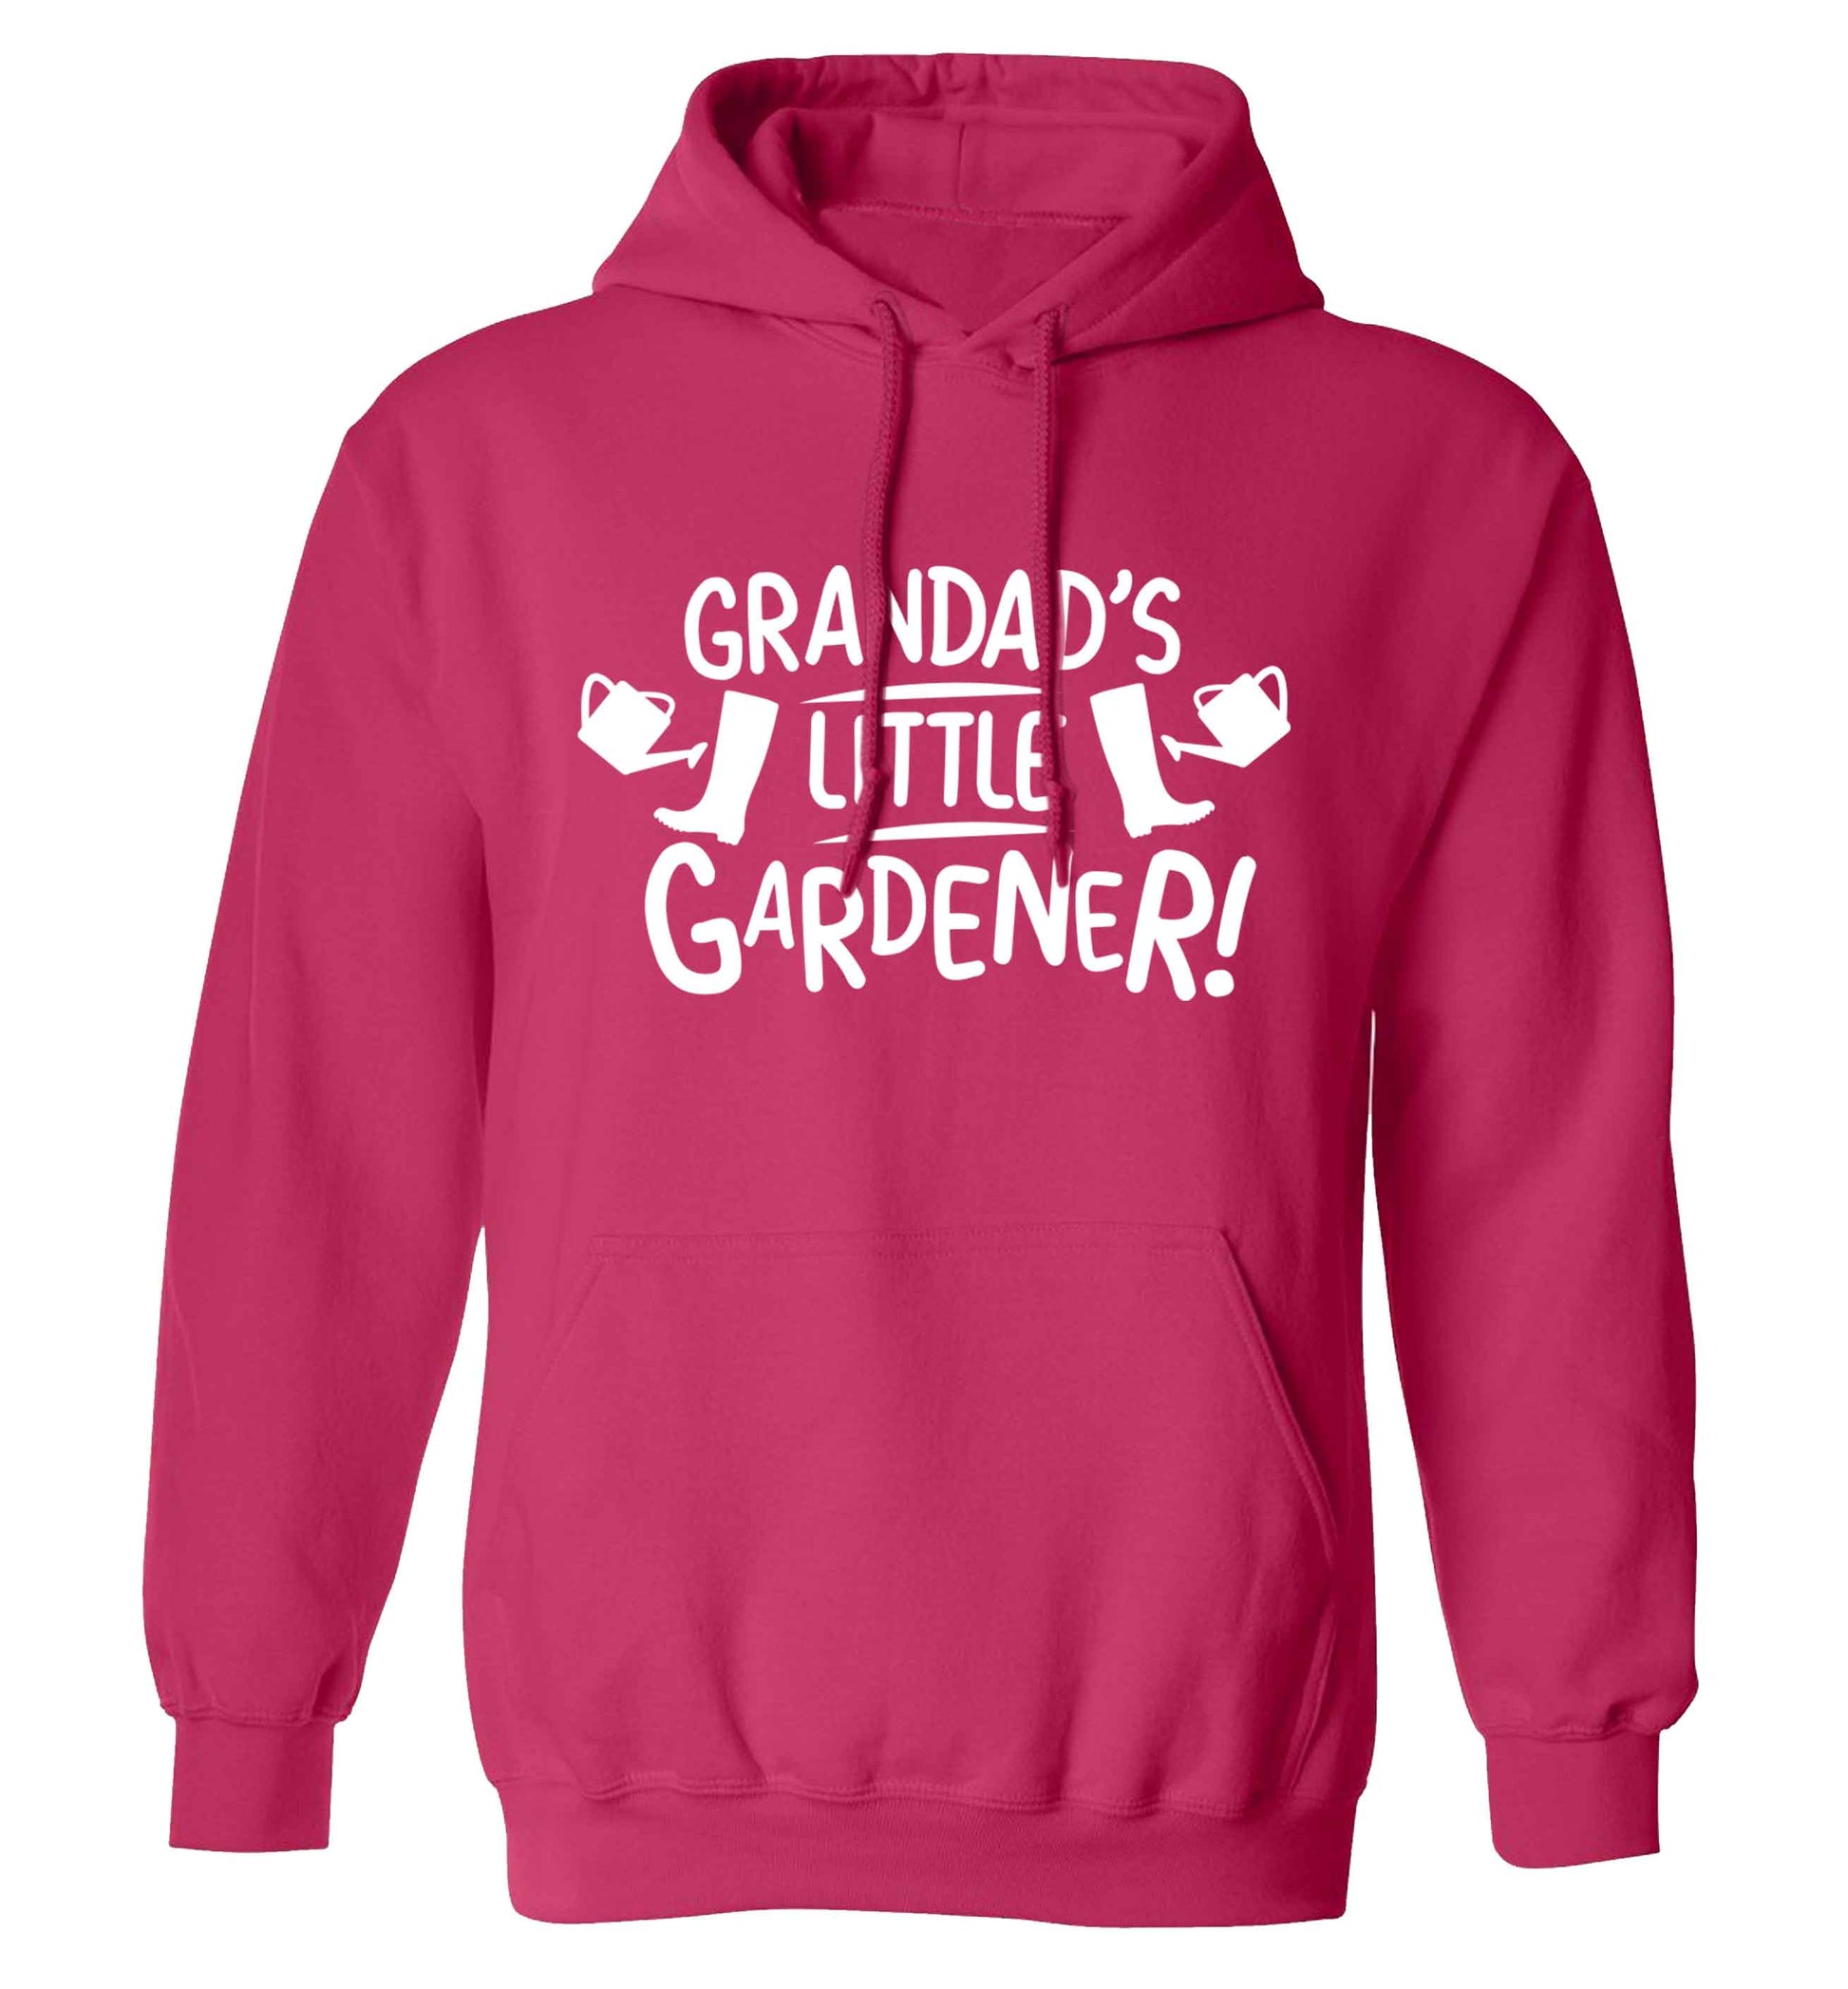 Grandad's little gardener adults unisex pink hoodie 2XL